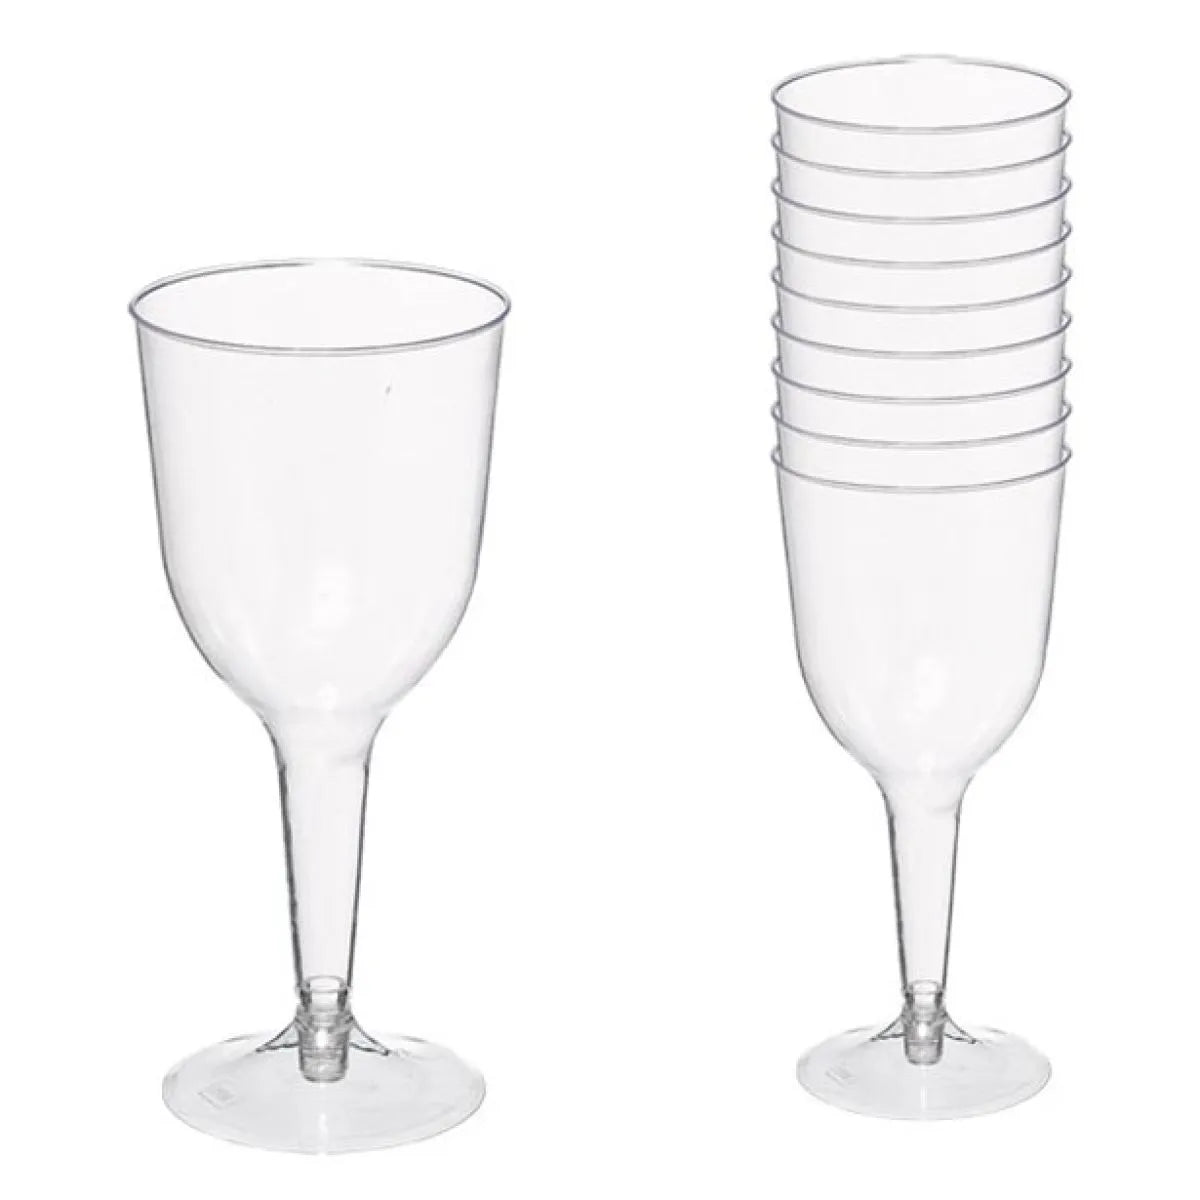 Clear Plastic Wine Glasses - 295ml (20pk)